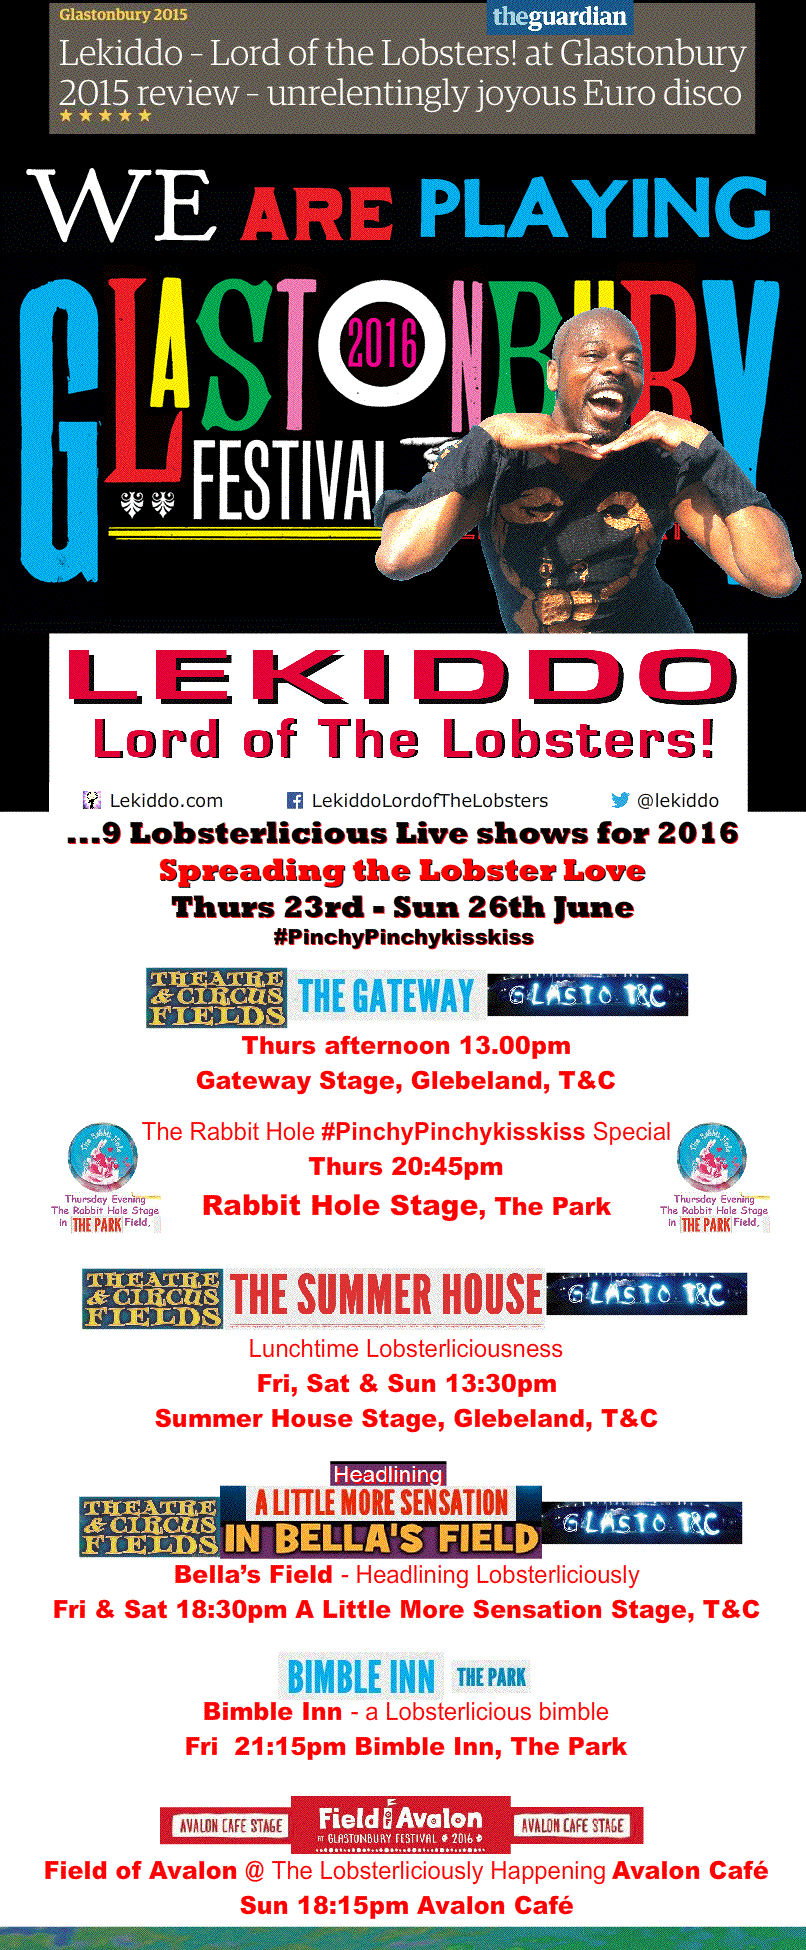 LEKIDDO - Lord of The Lobster! live at #Glastonbury Festival (Official) 2016 @GlastoFest @lekiddo @glastotandc @GlastoAstro @ShangrilaGlasto @glastocabaret @glastofreepress @GlastoWatch @GladeAreaGlasto @FieldofAvalon @GlastoTheCommon @TheGlastoThingy #PinchyPinchykisskiss #Glasto2016 #G'bury2016 #GlastonburyFestival #Festival #Glasto #PPkk